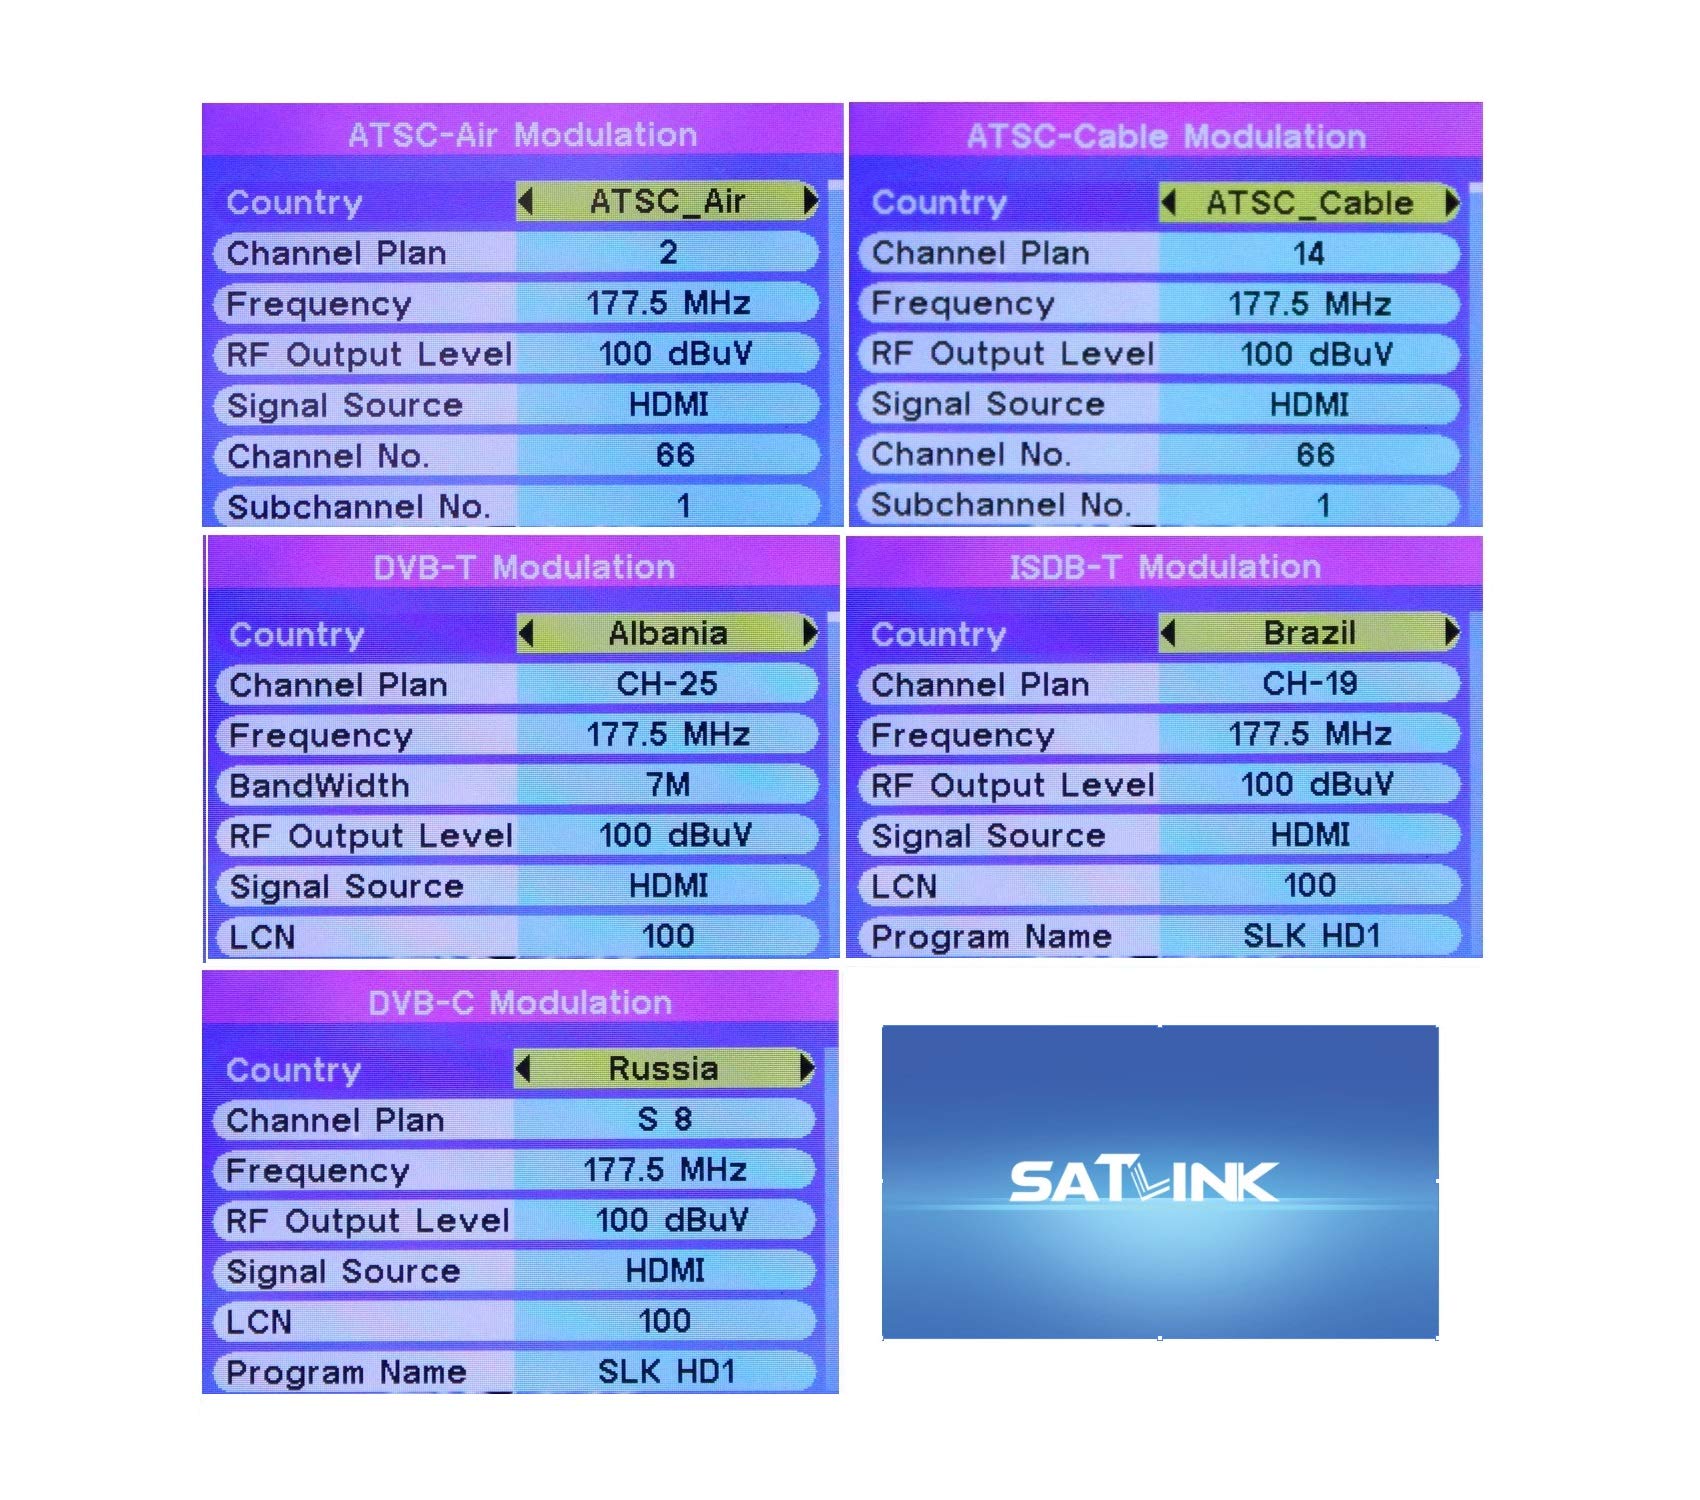 SatLink ST-7000 HDMI to RF Digital Modulator/Encoder Delivers 1080p HDMI Video to TVs as HD ATSC or QAM (J.83B) Channel via Coax Network